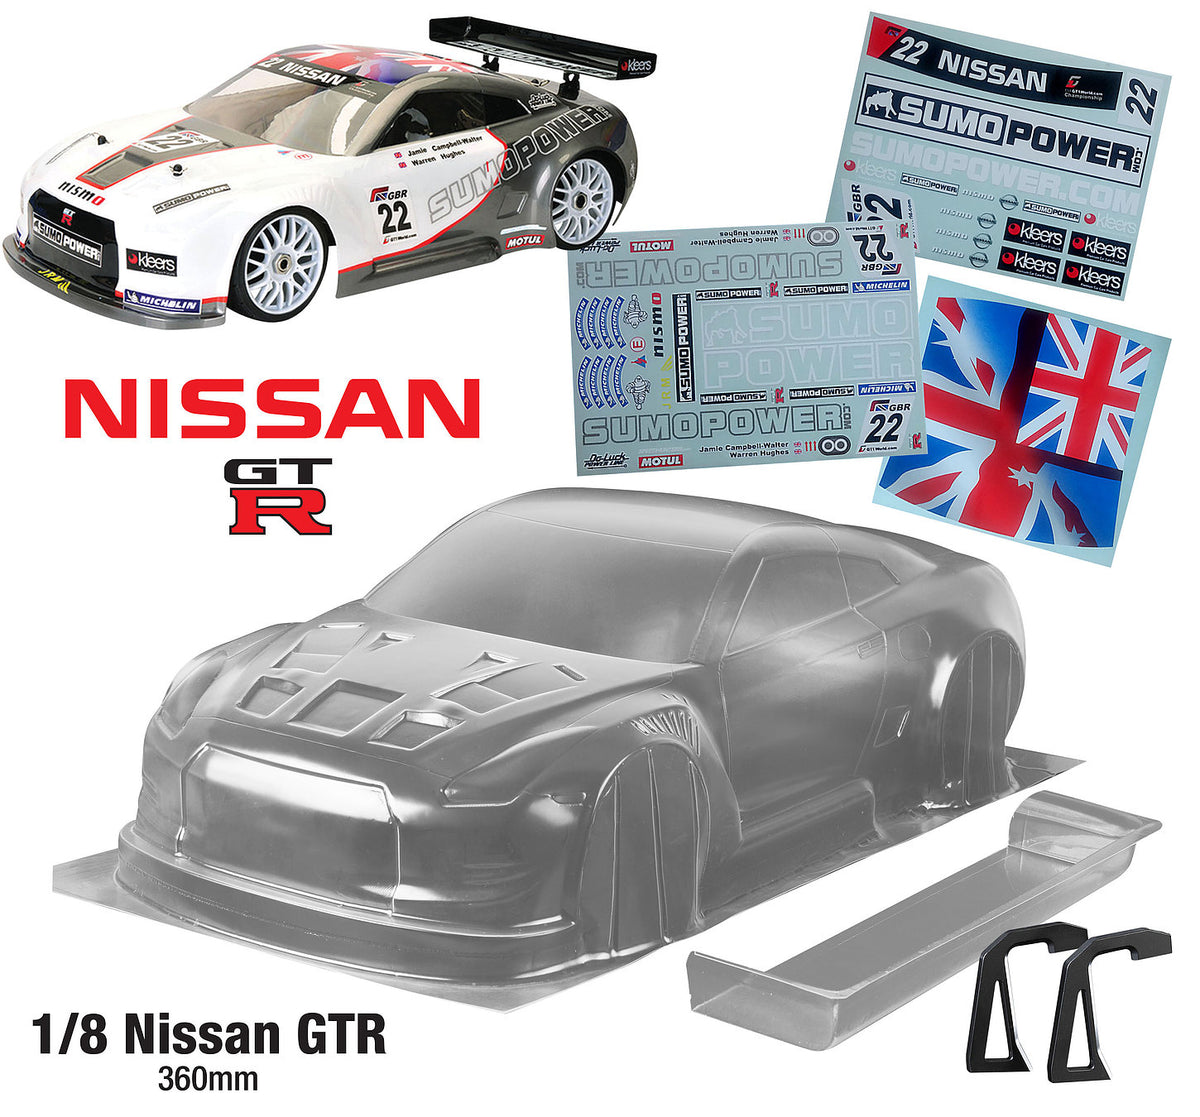 1/8 Nissan Skyline GTR (R35) bodyshell (360mm wheelbase)